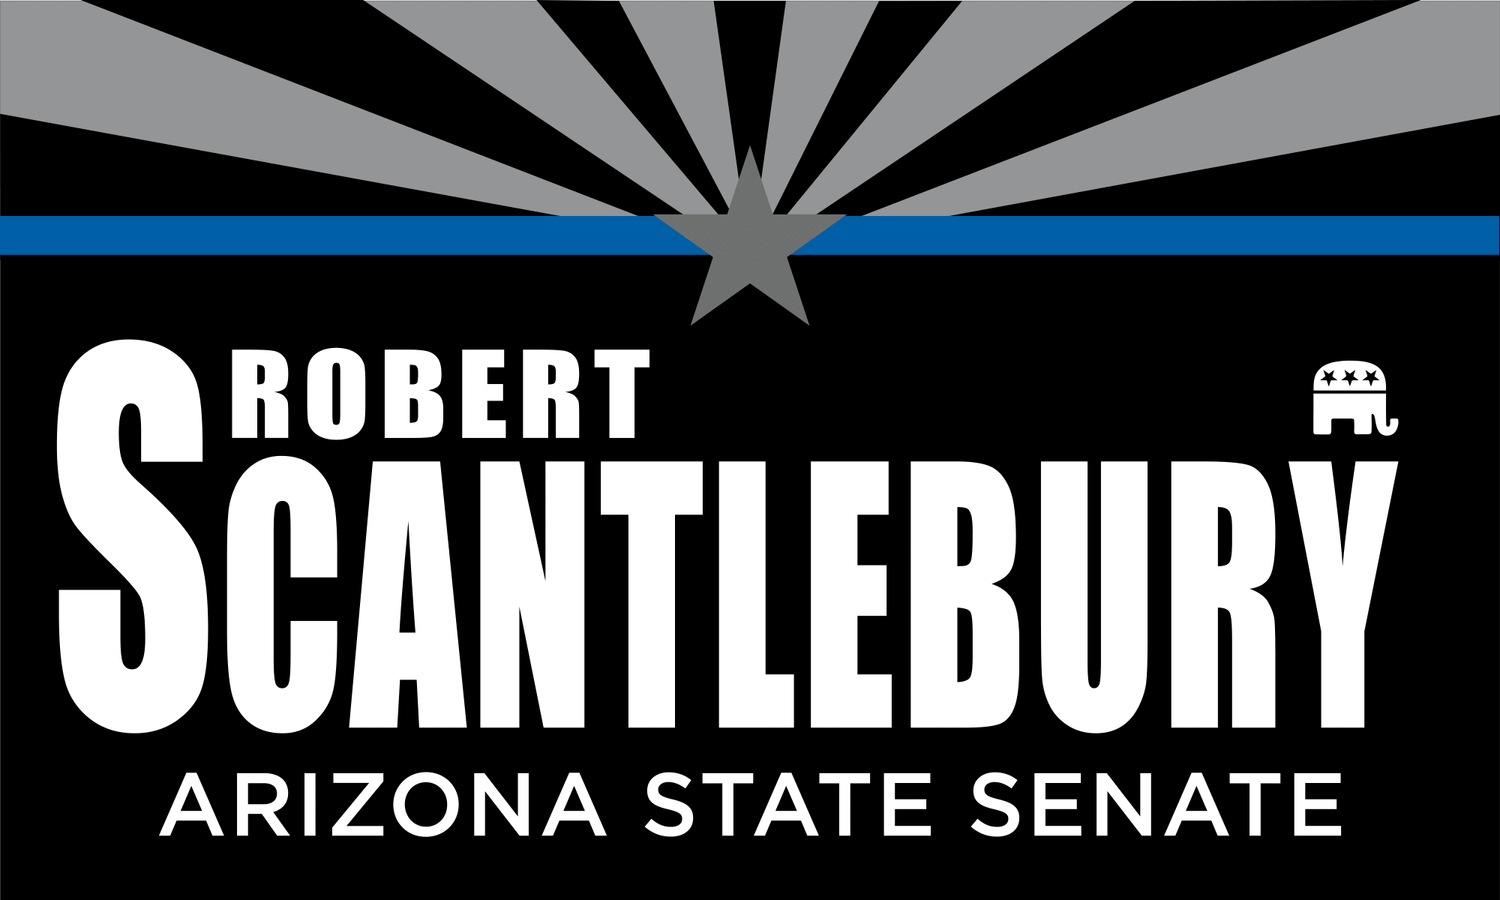 Robert Scantlebury For State Senate